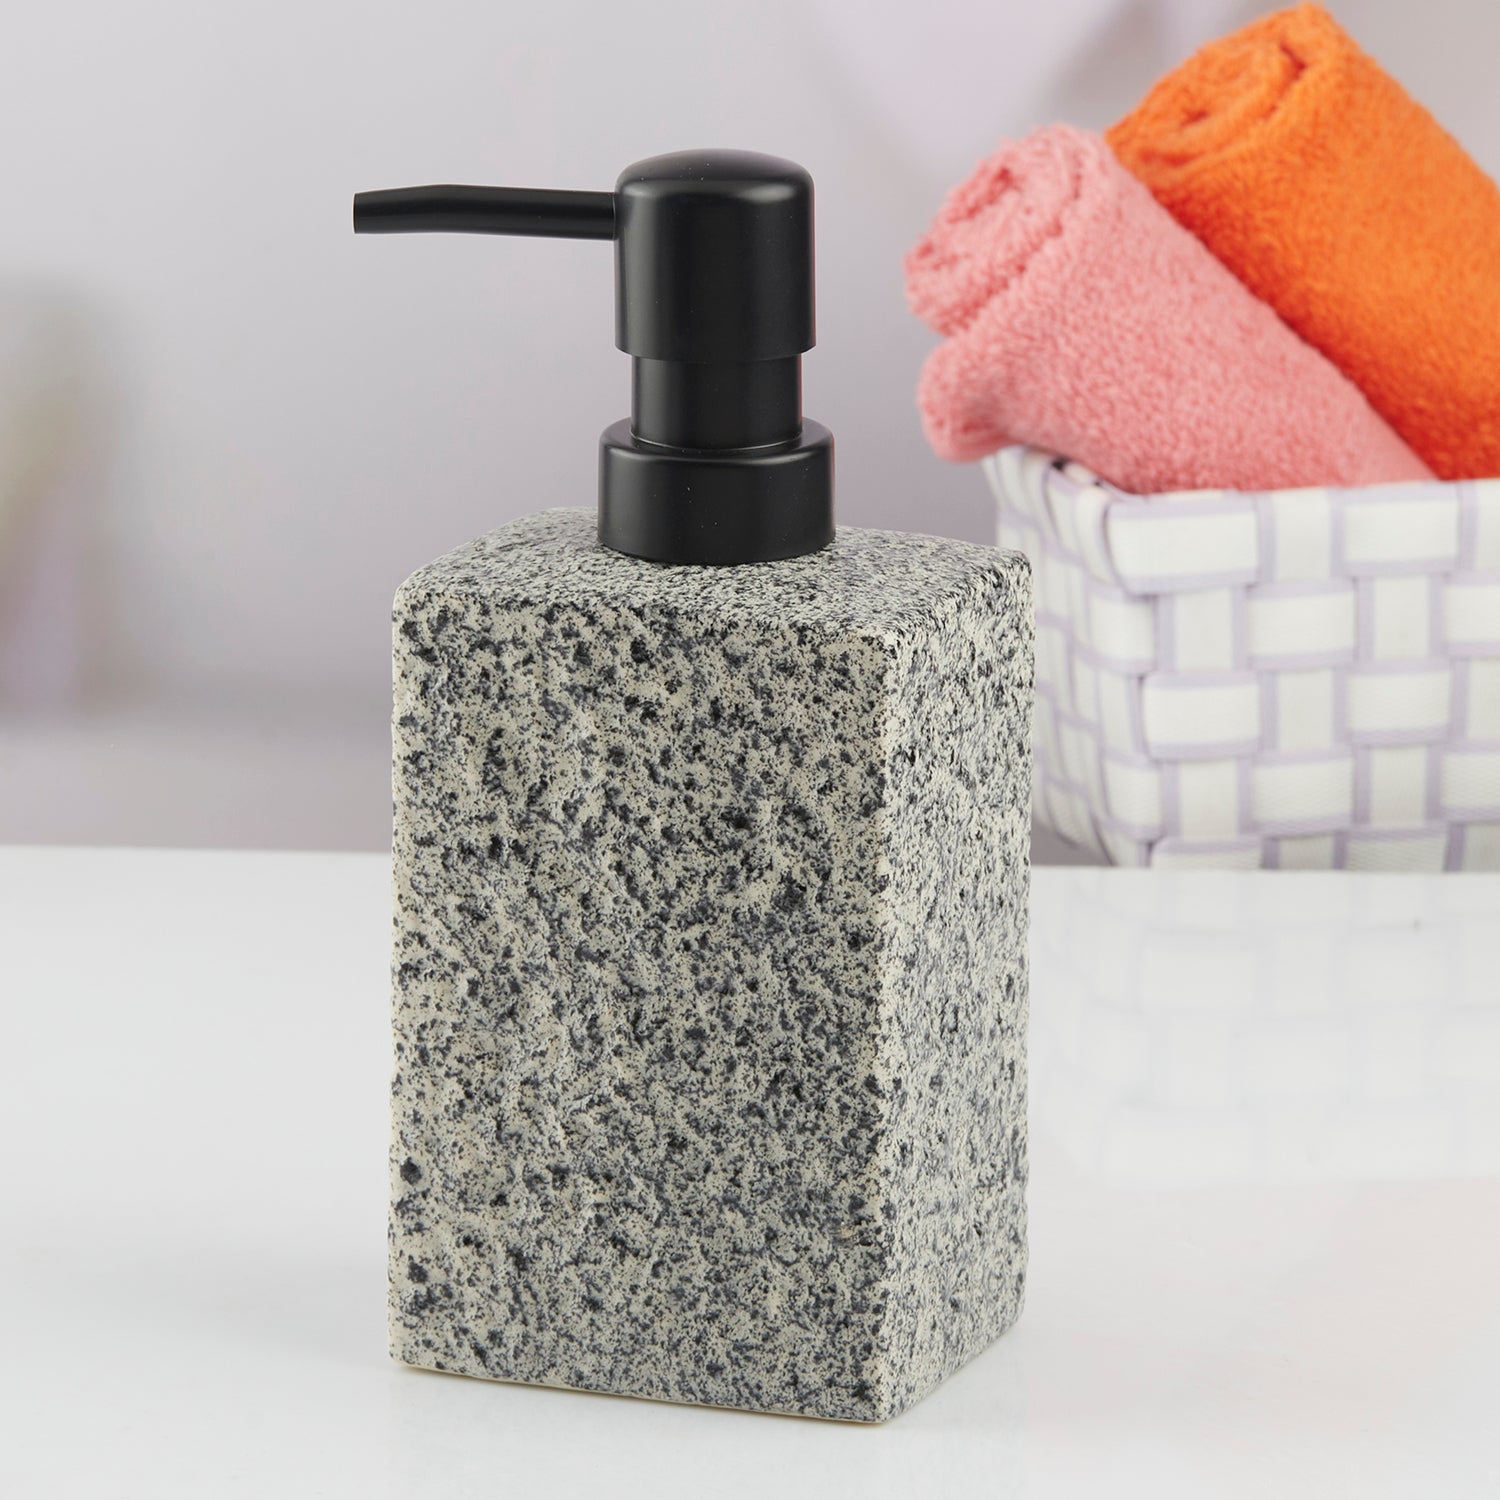 Ceramic Soap Dispenser handwash Pump for Bathroom, Set of 1, Grey (10622)